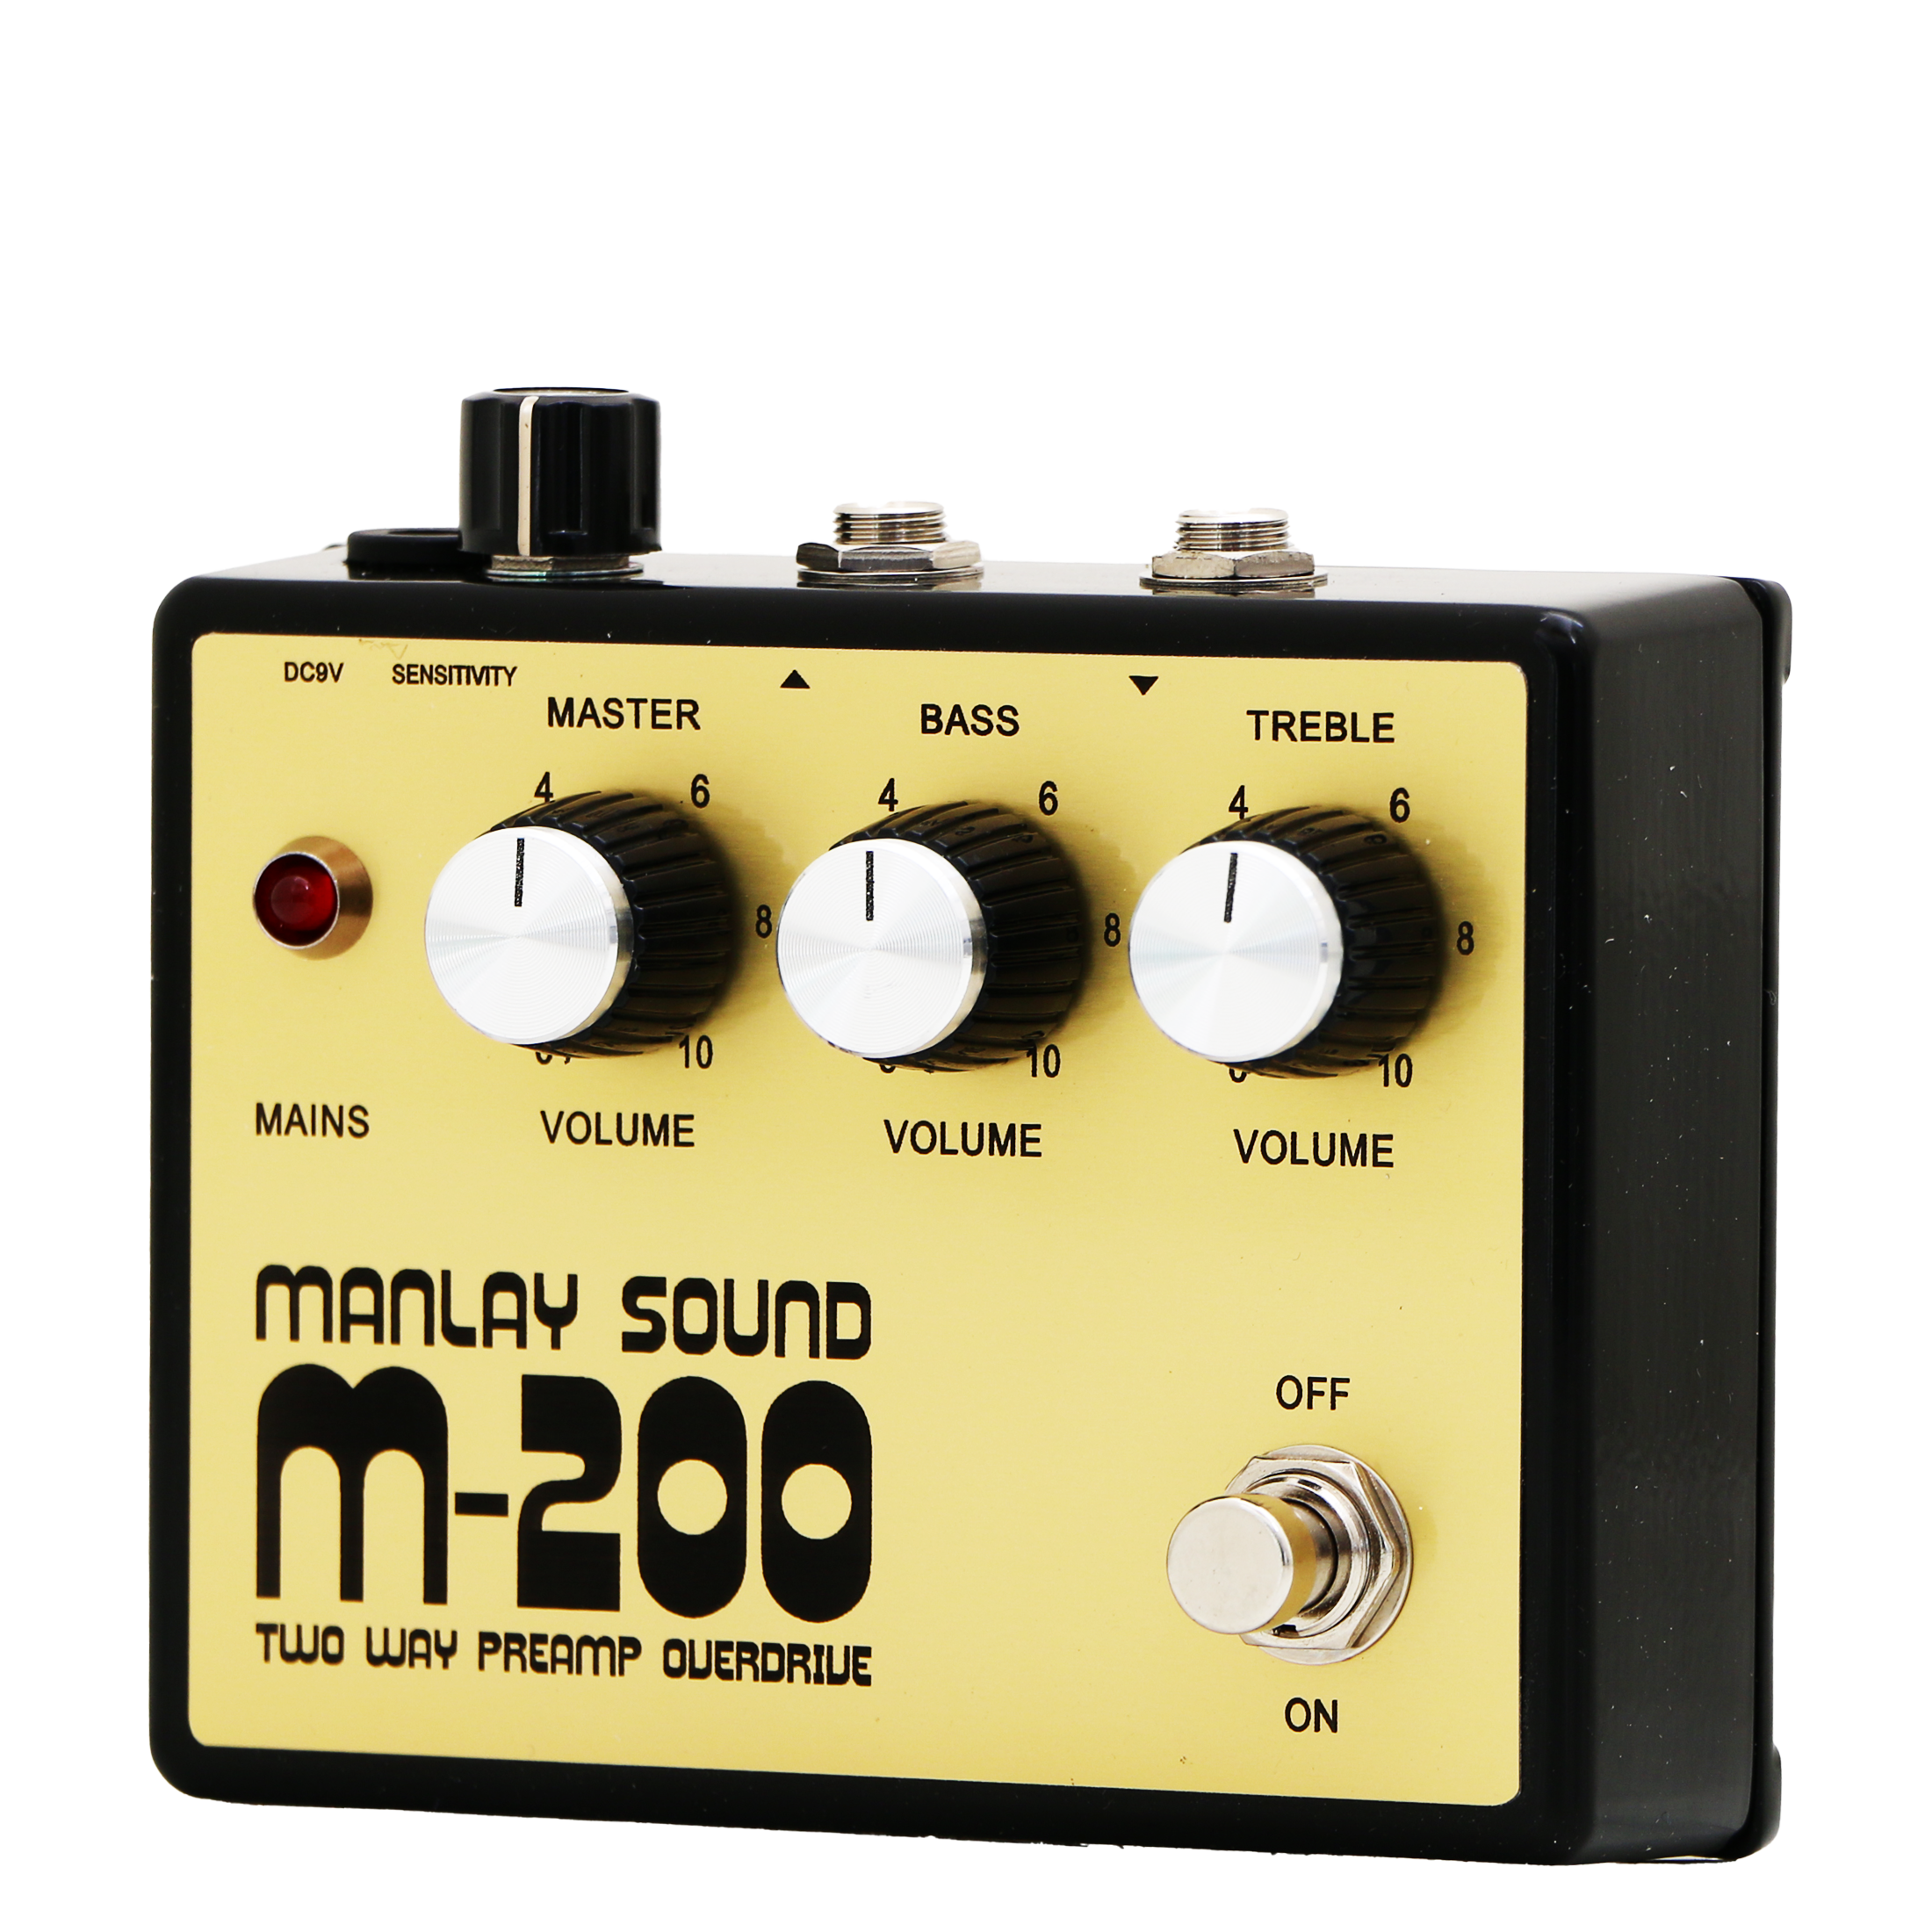 Manlay sound M200